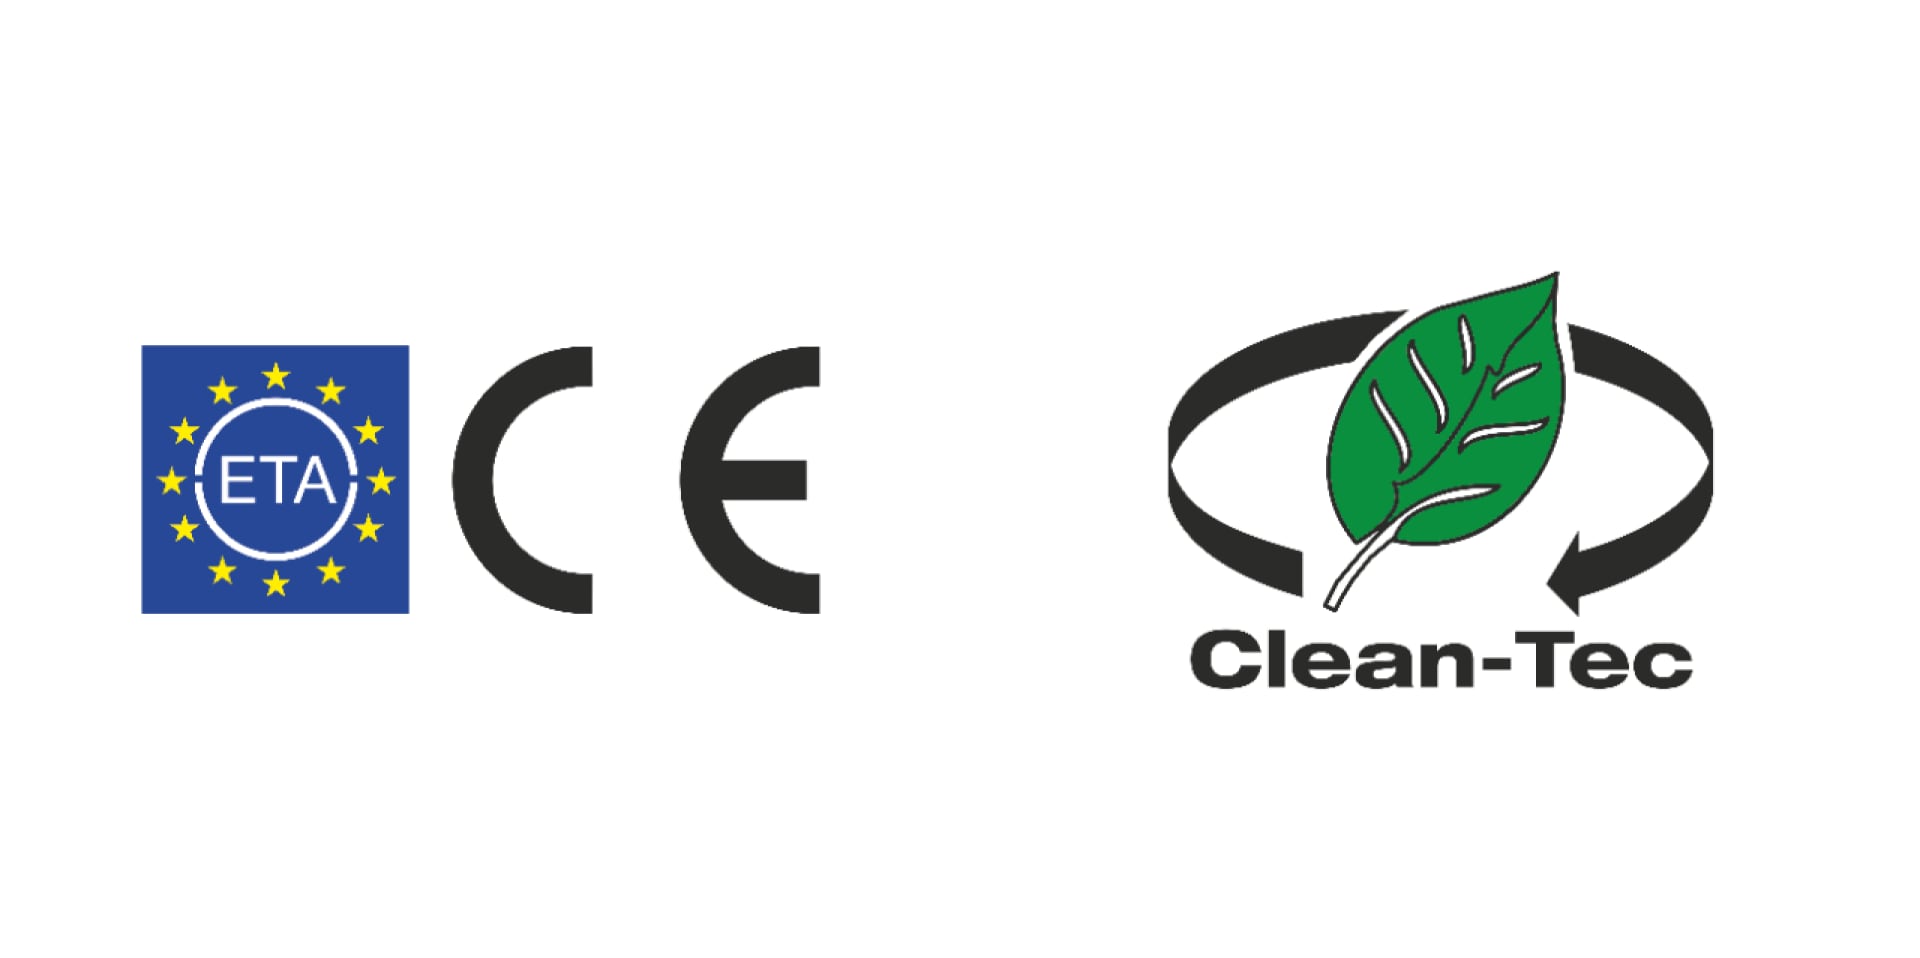 Logos for ETA and CE approval, plus the Hilti Clean-Tec logo